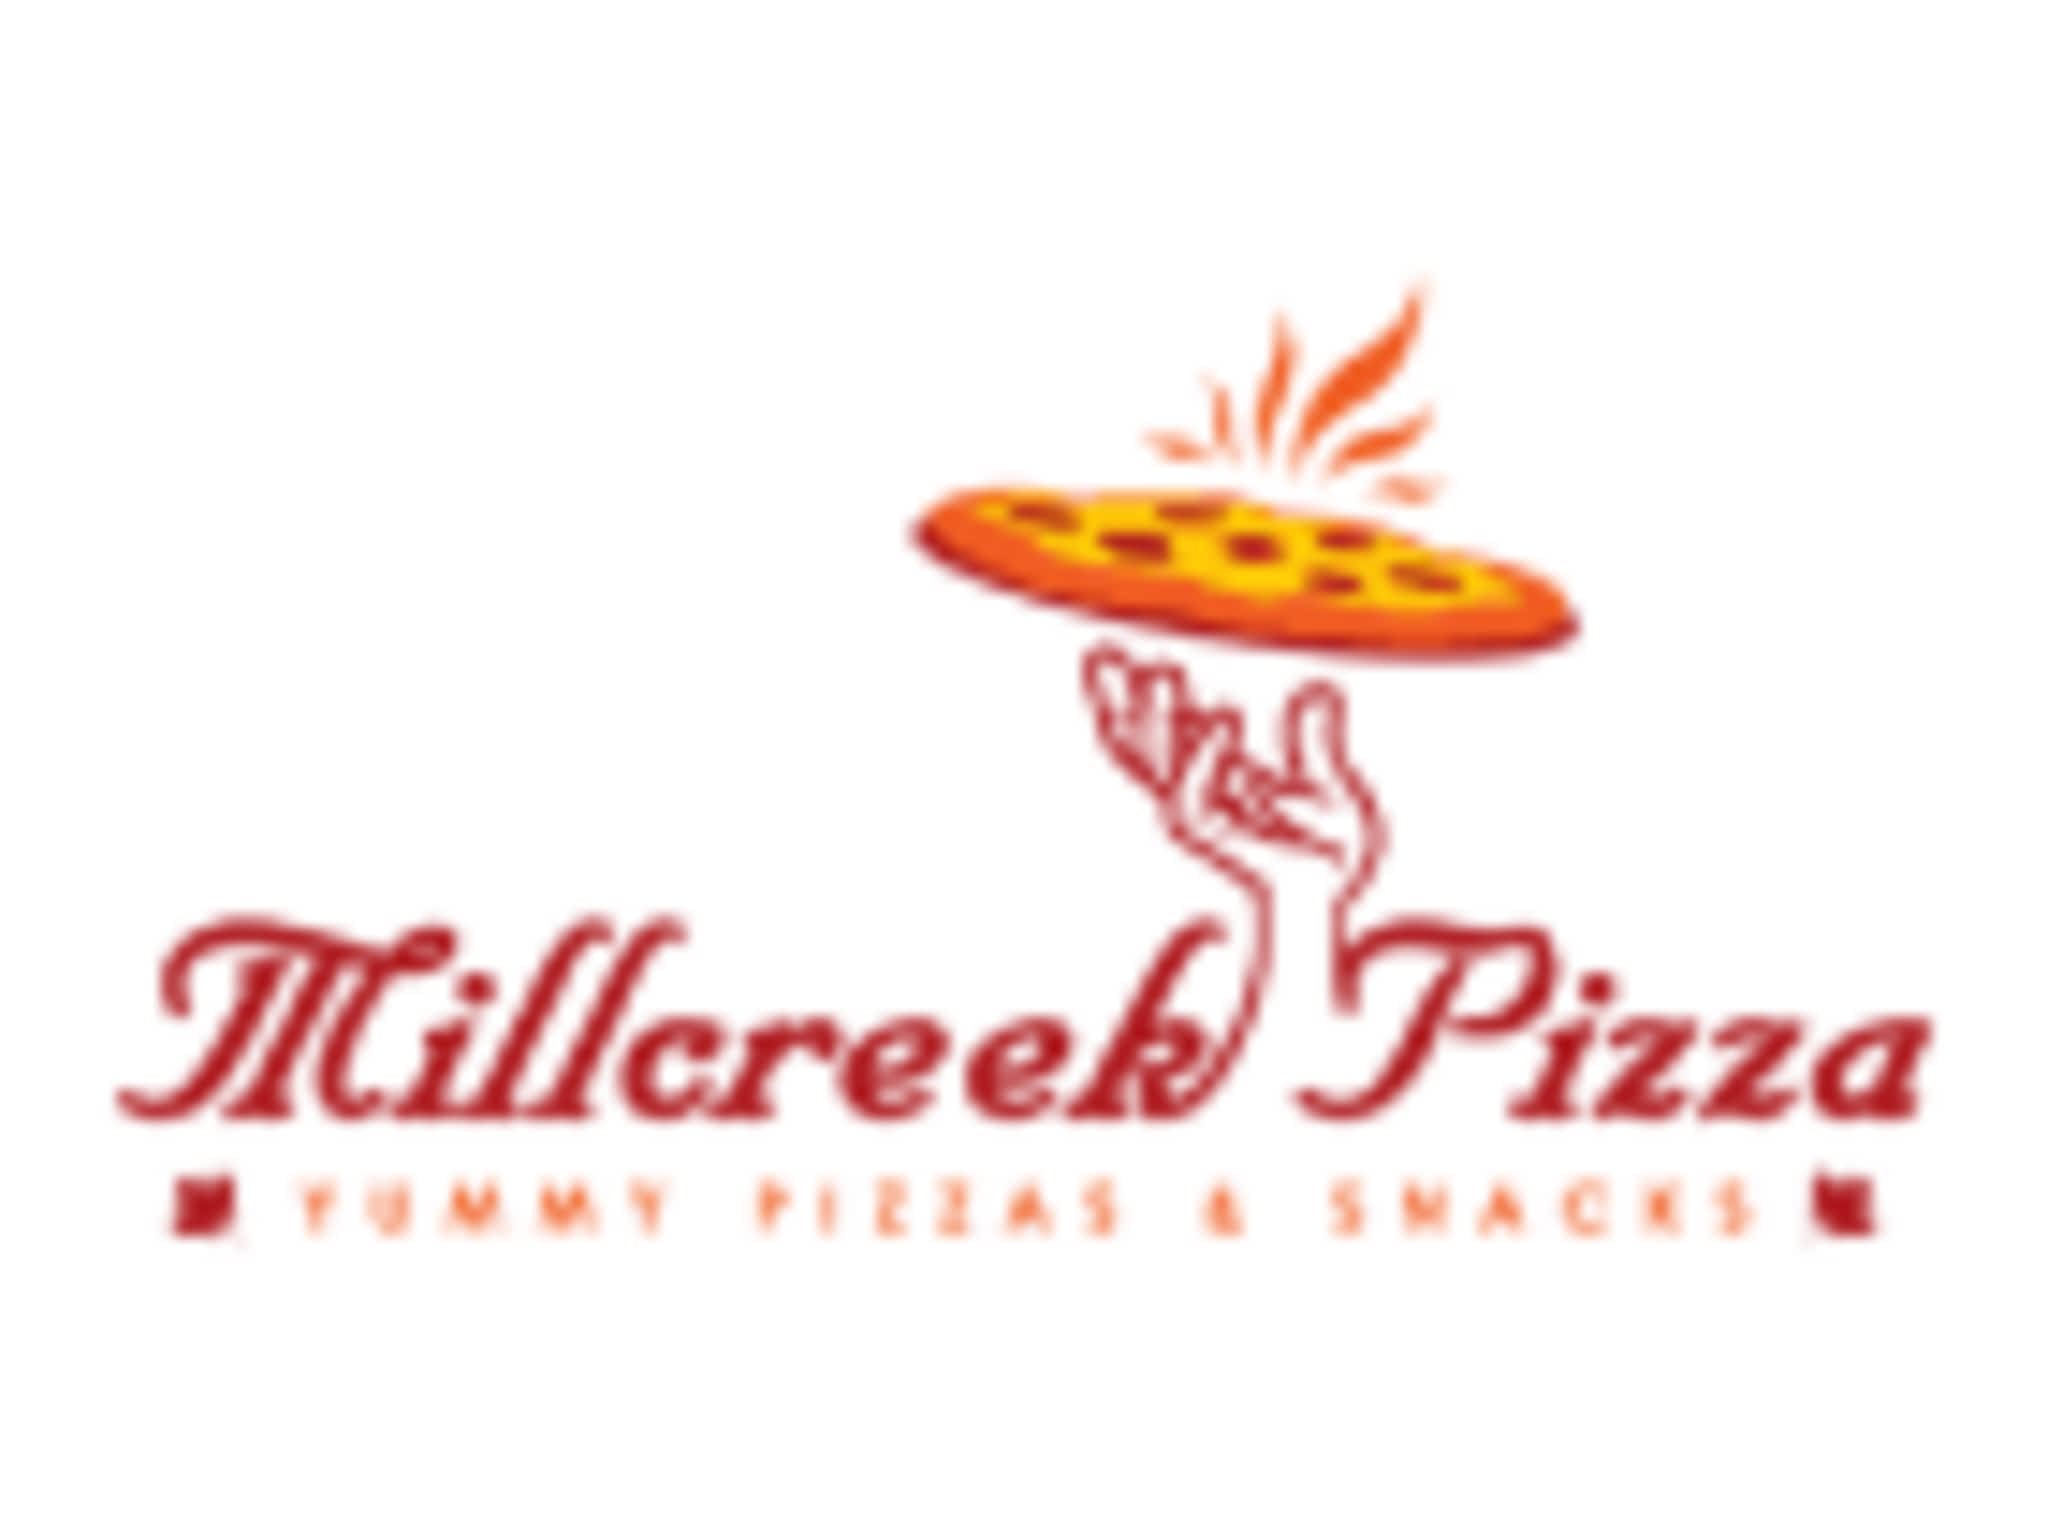 photo Millcreek Pizza